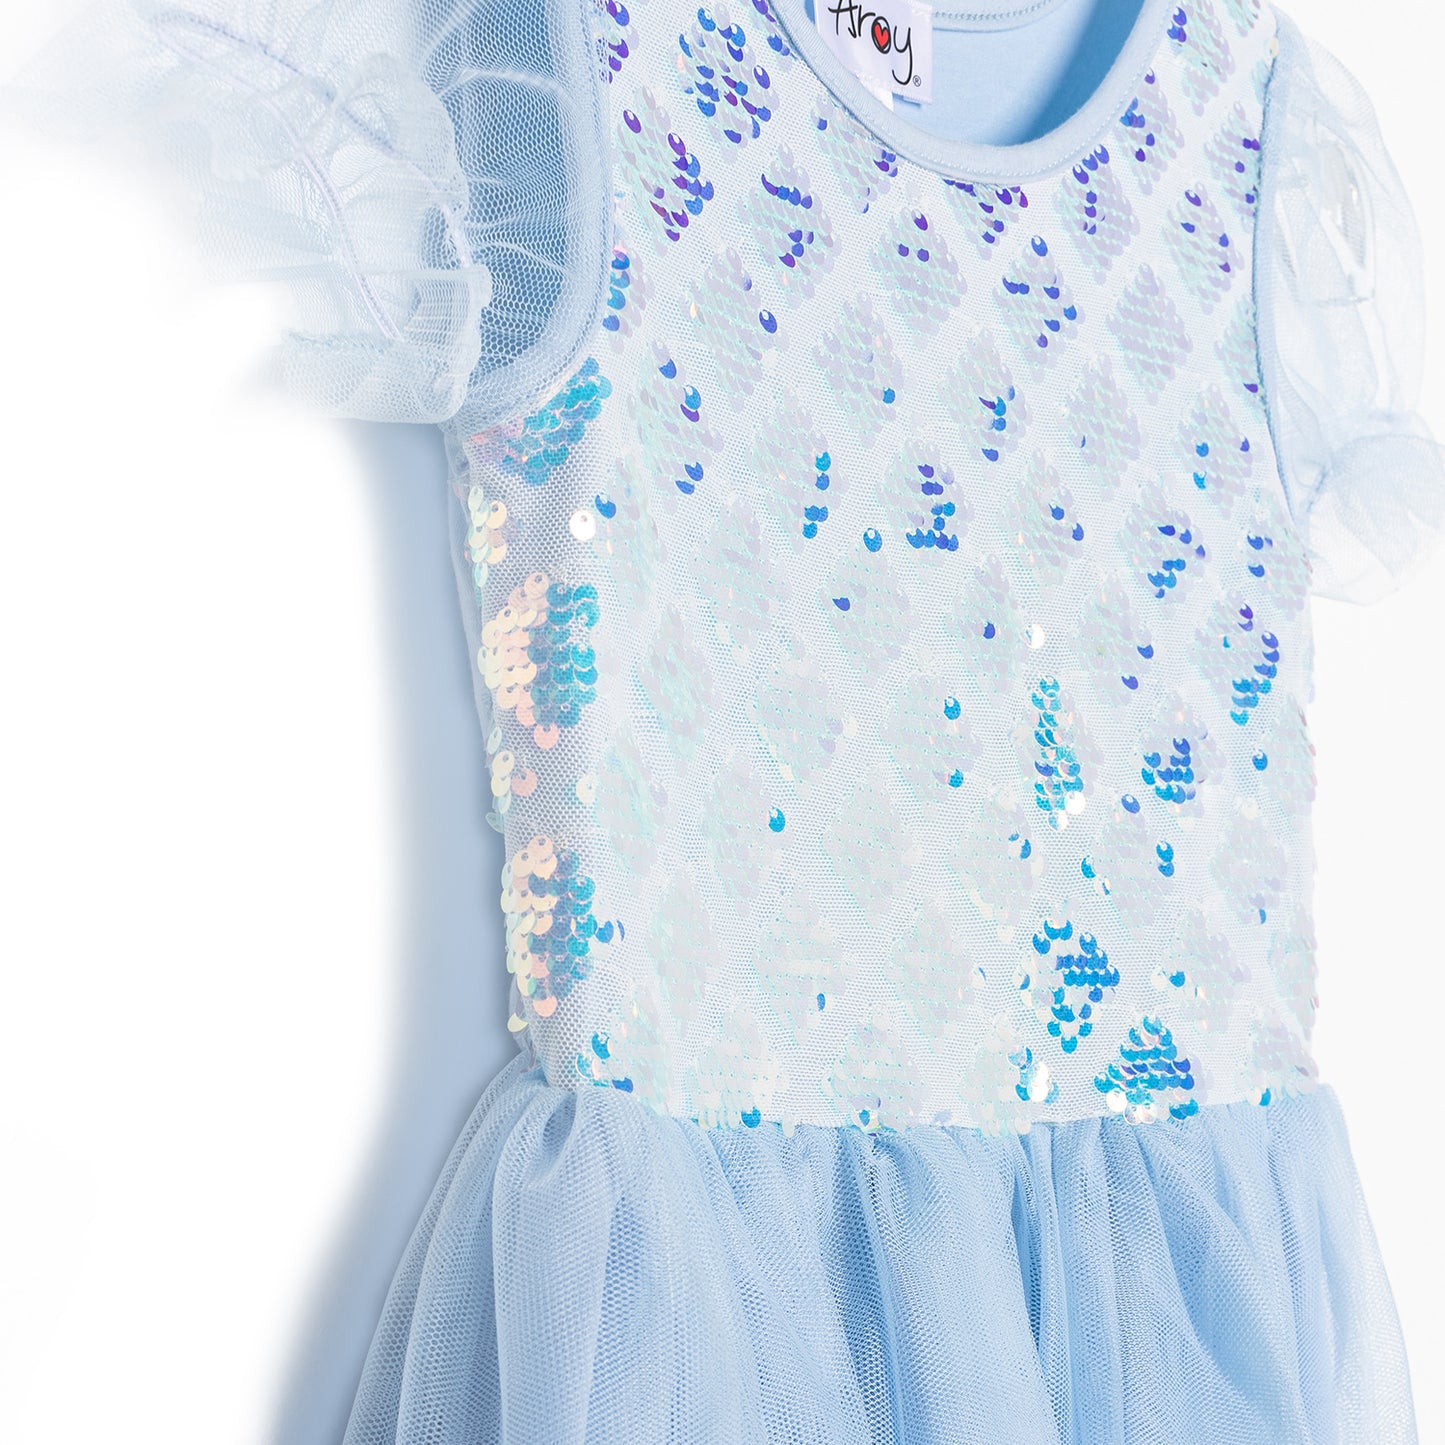 Mermaid Blue Sequin Dress #2204005